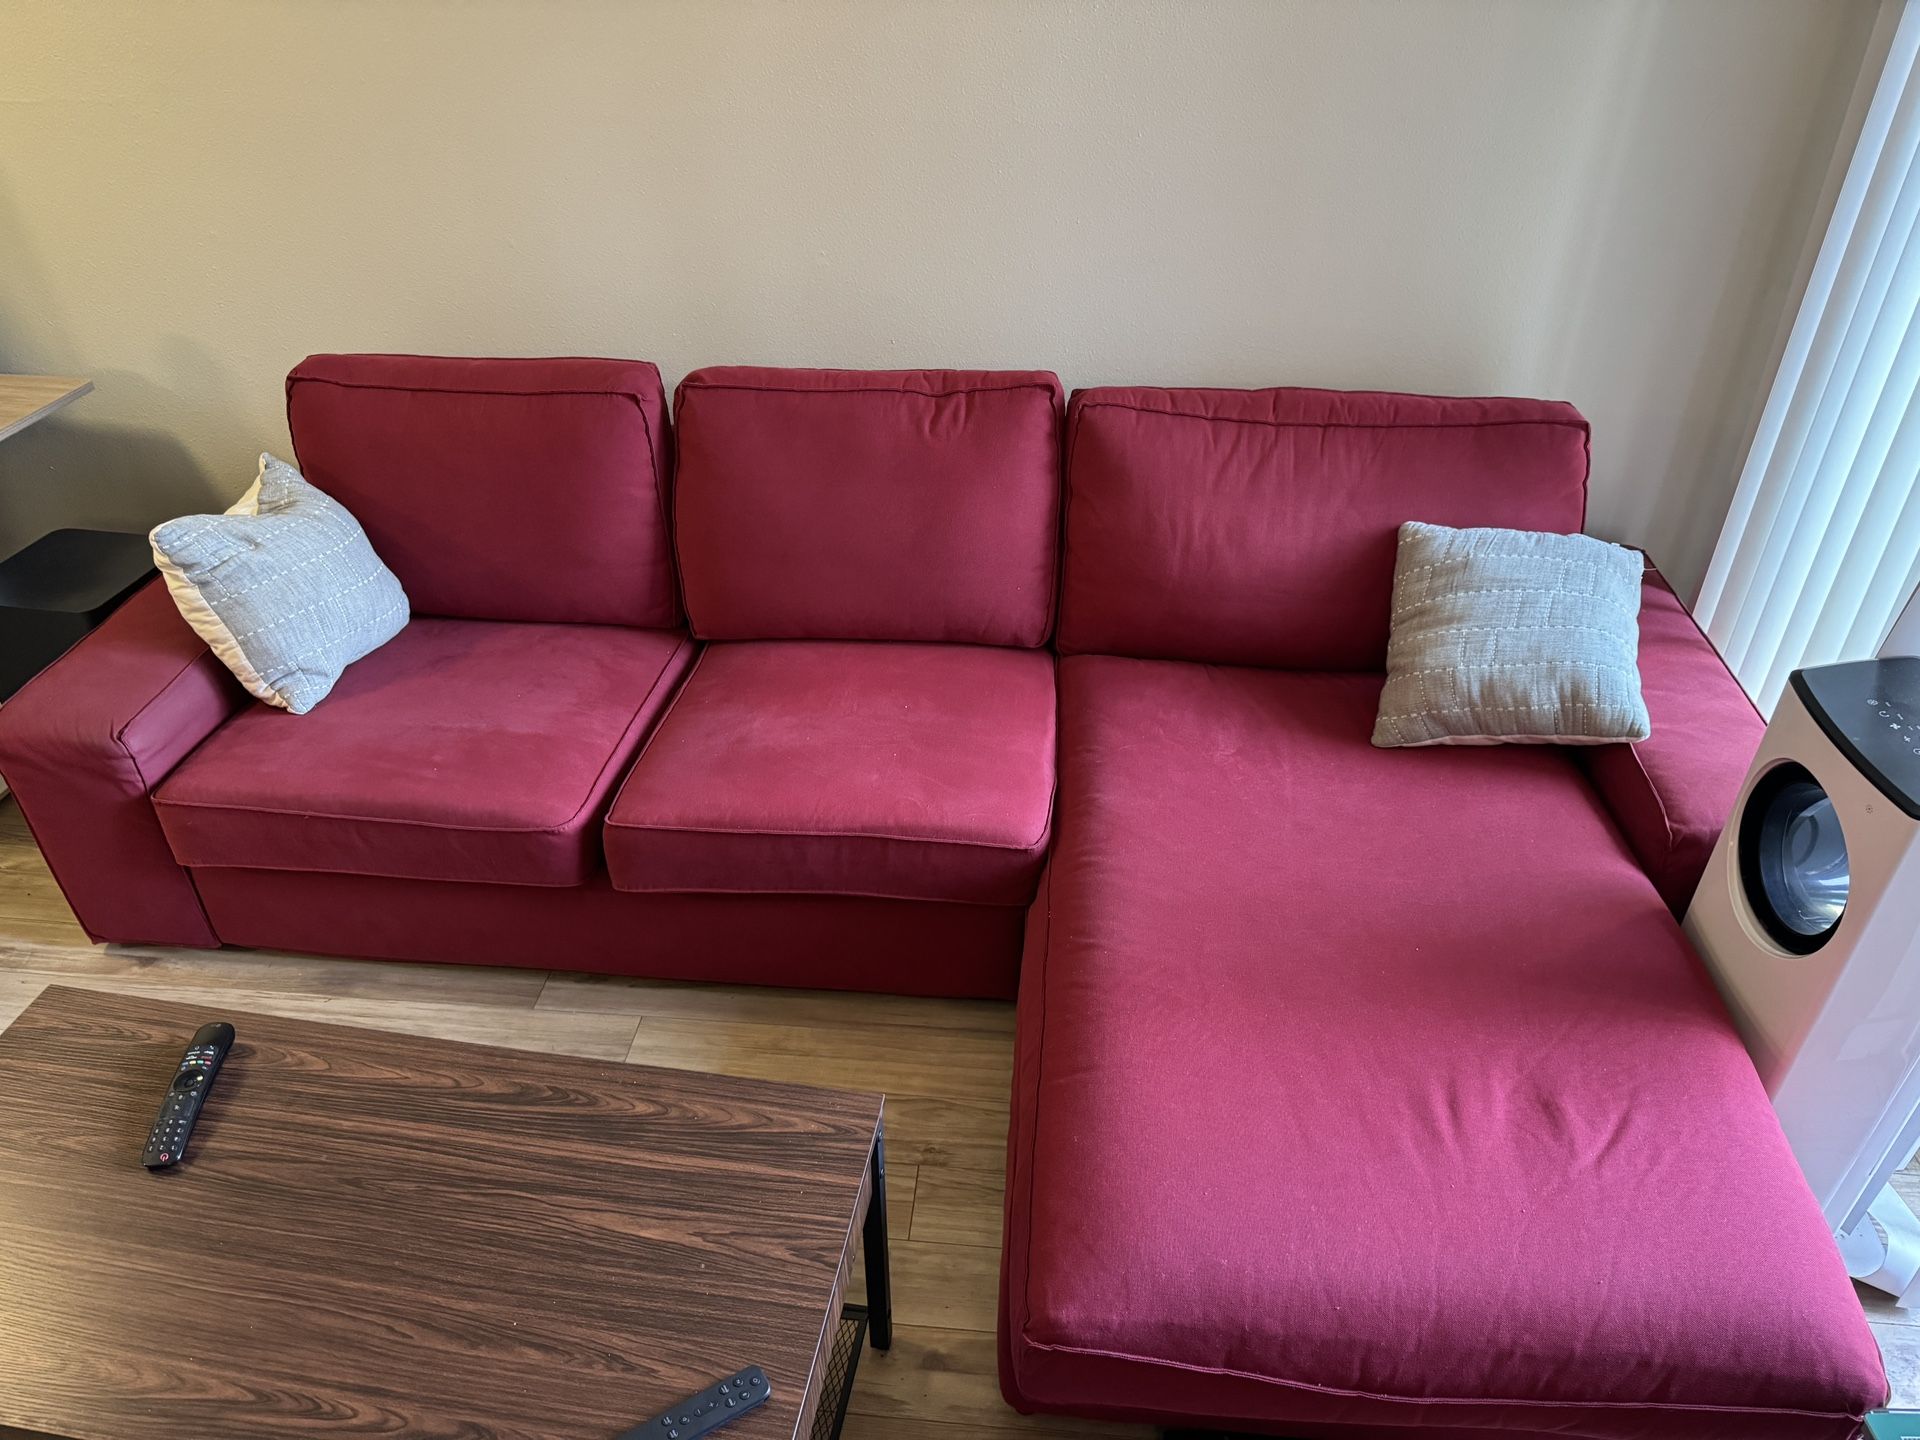 IKEA Red Kivik Sofa With Chaise